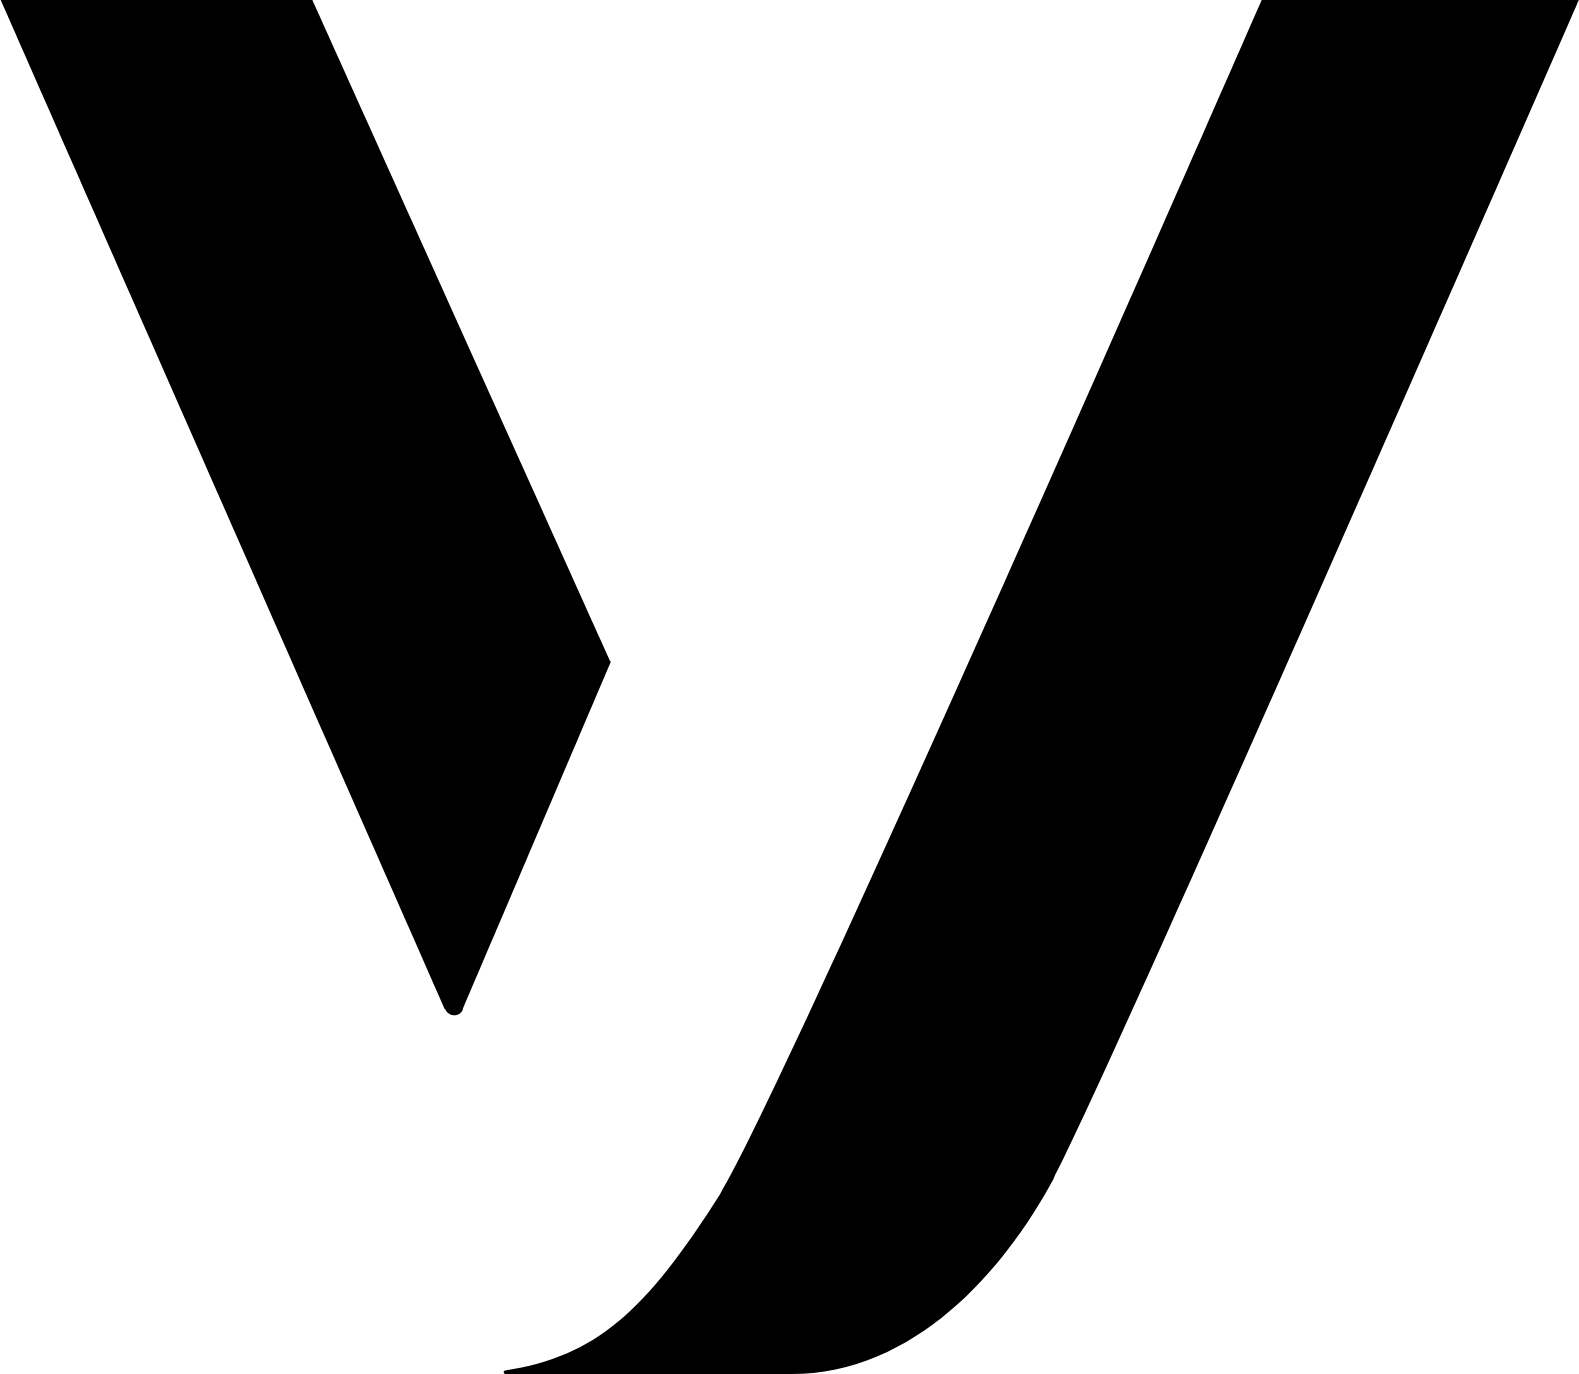 Vonage Holdings Corp. logo (transparent PNG)